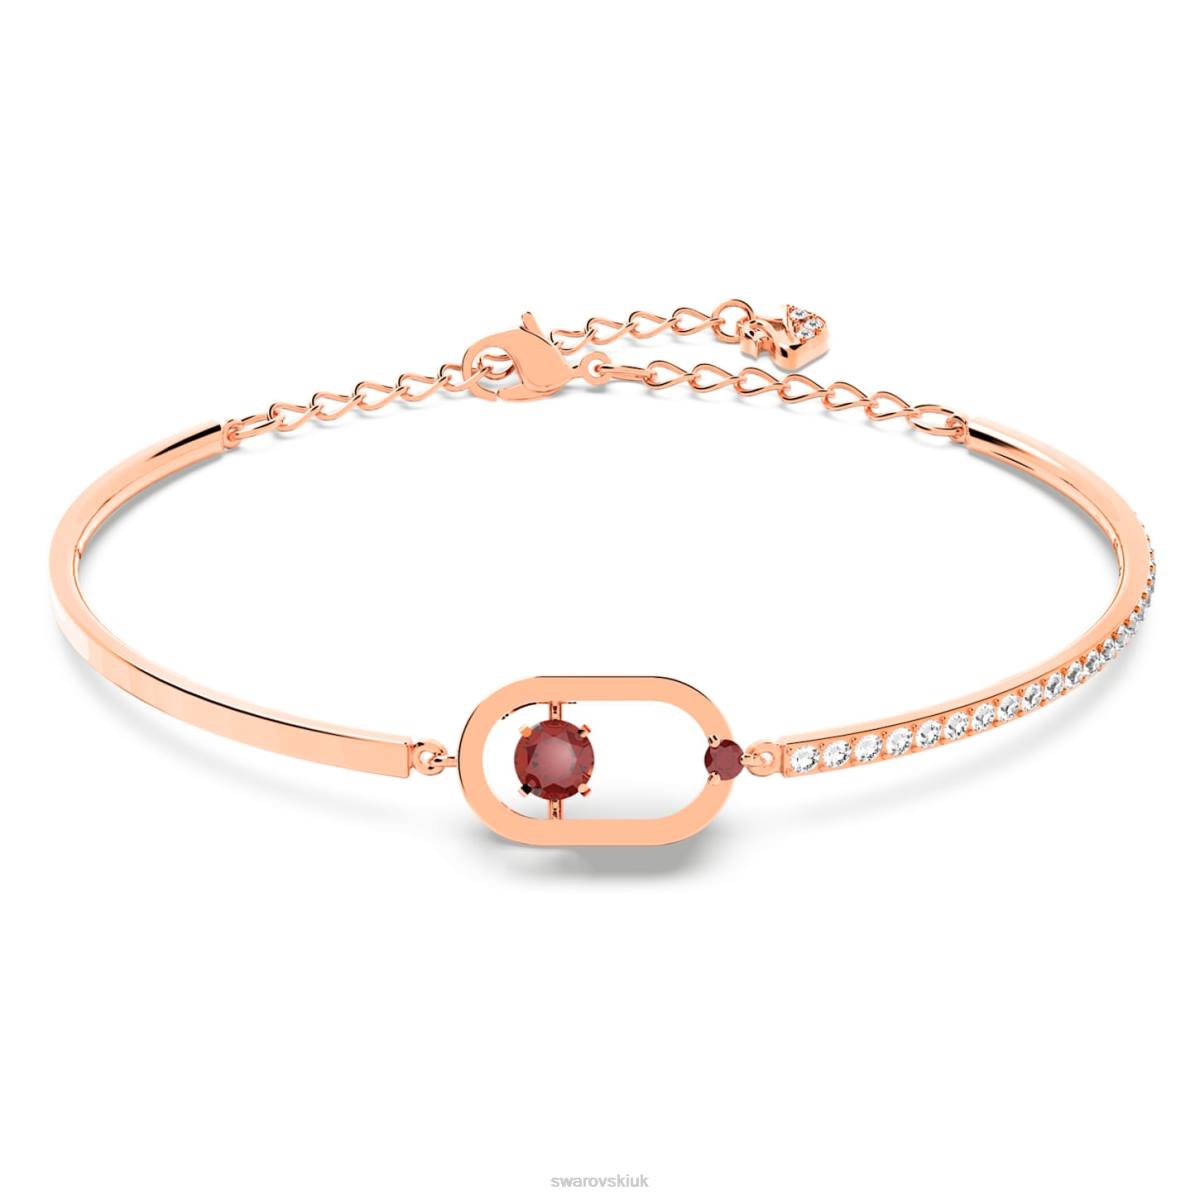 Jewelry Swarovski Sparkling Dance bracelet Round cut, Oval shape, Red, Rose gold-tone plated 48JX640